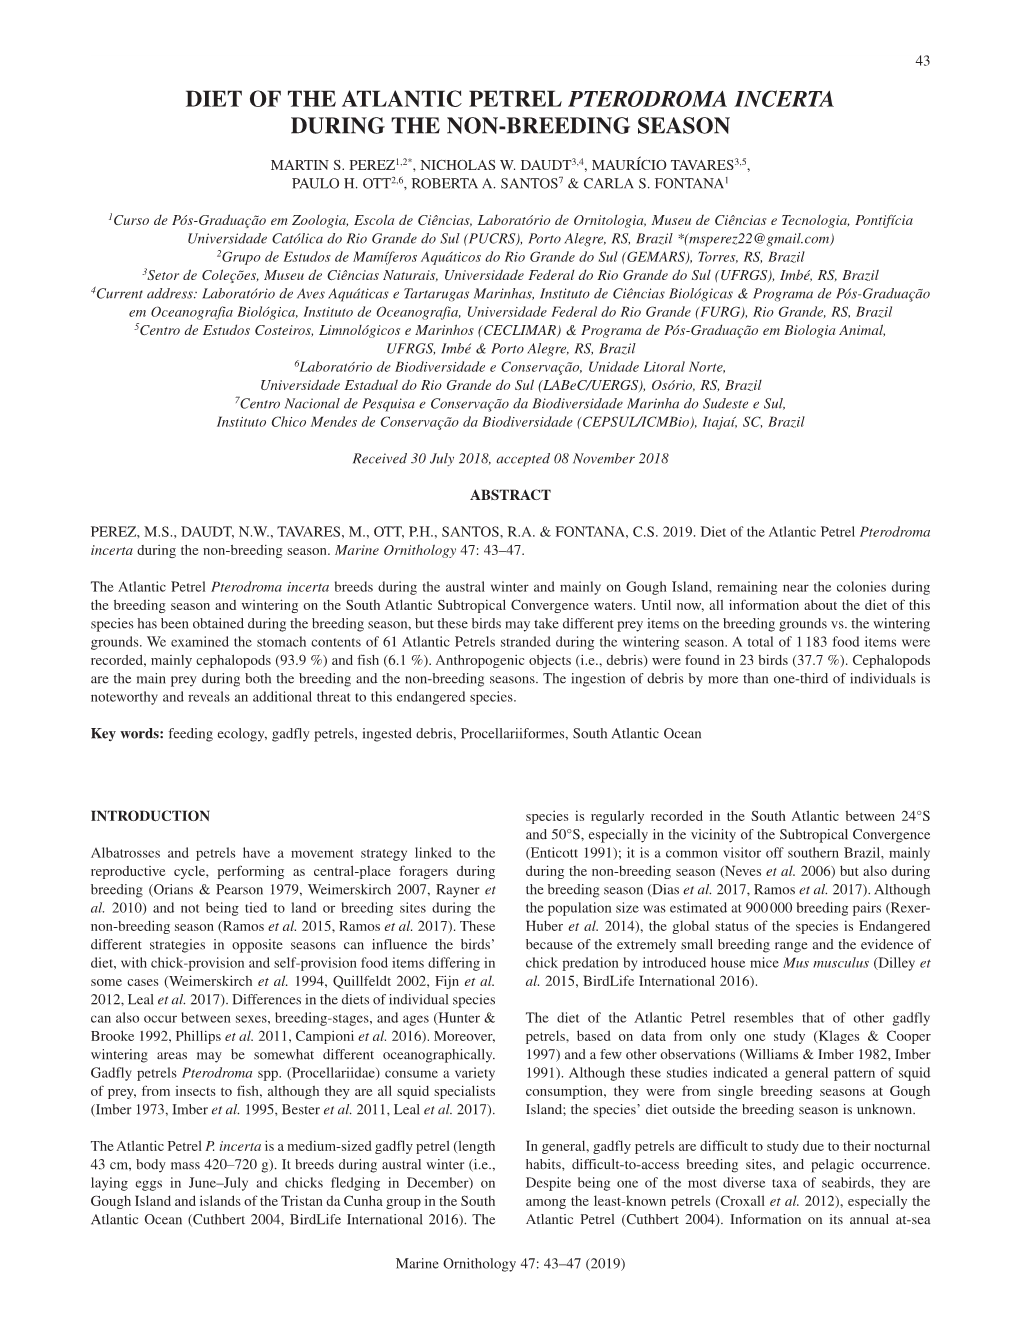 Diet of the Atlantic Petrel Pterodroma Incerta During the Non-Breeding Season